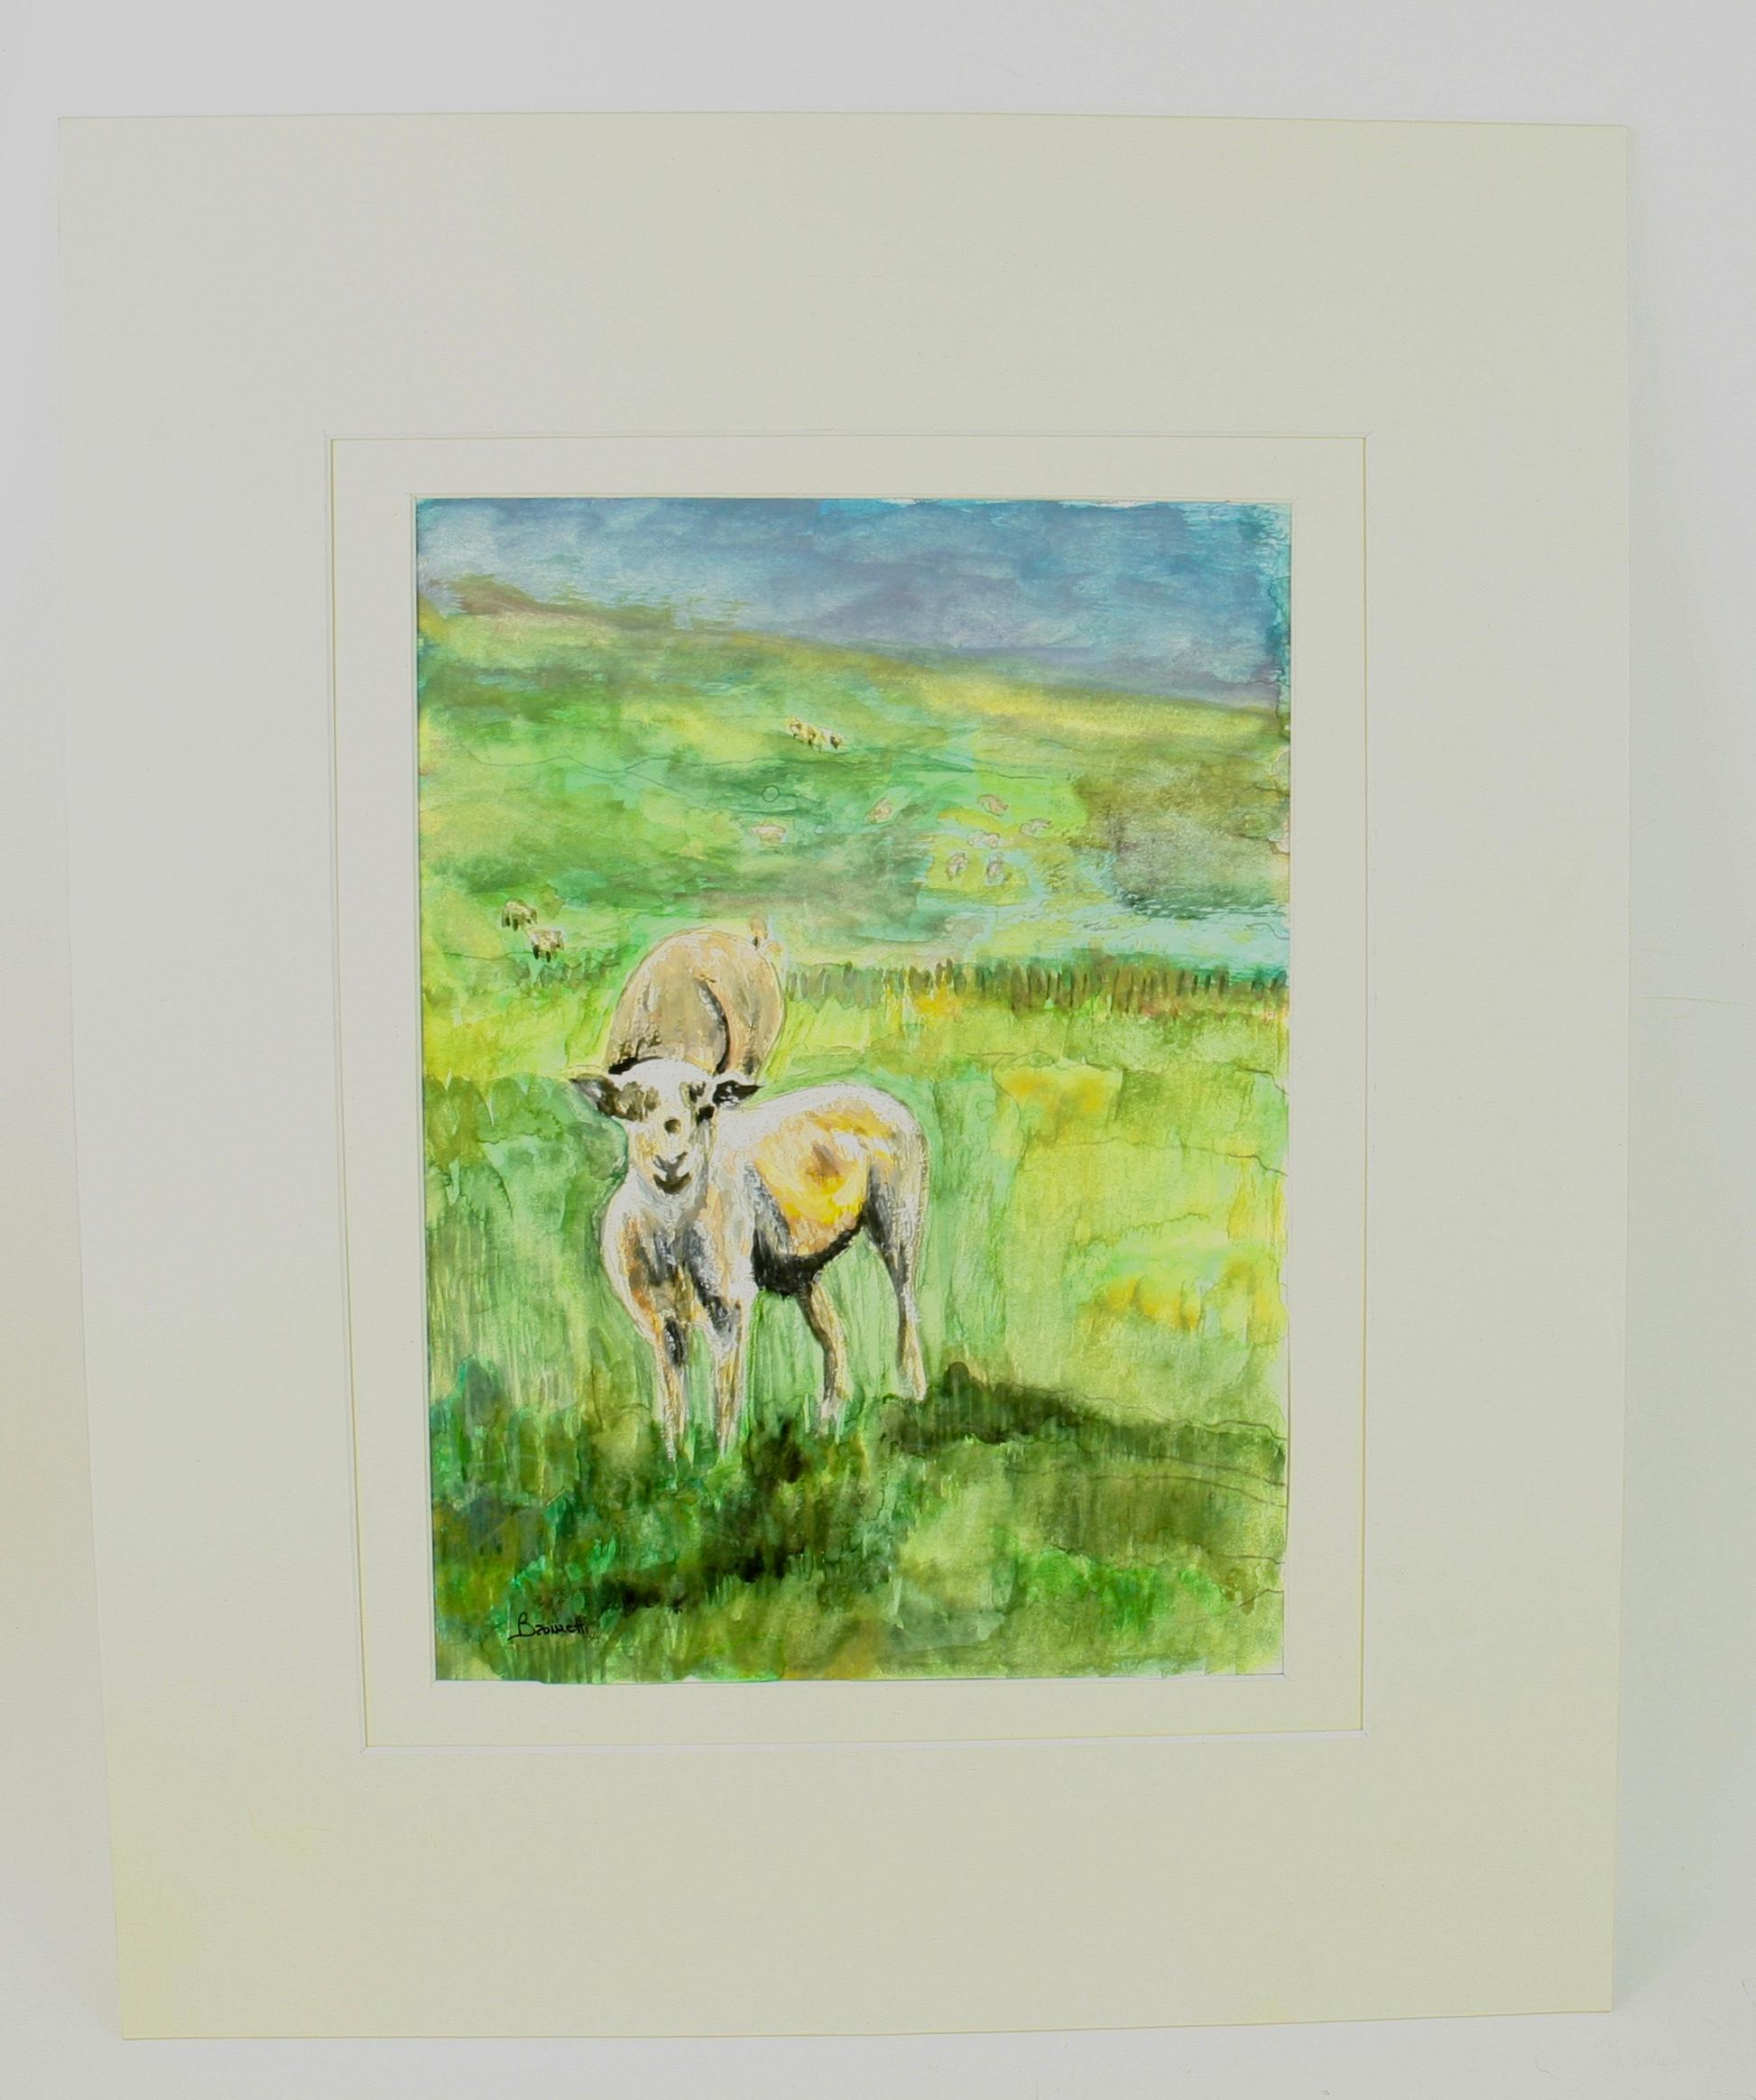 Sheep Grazing - Painting by Brunetti